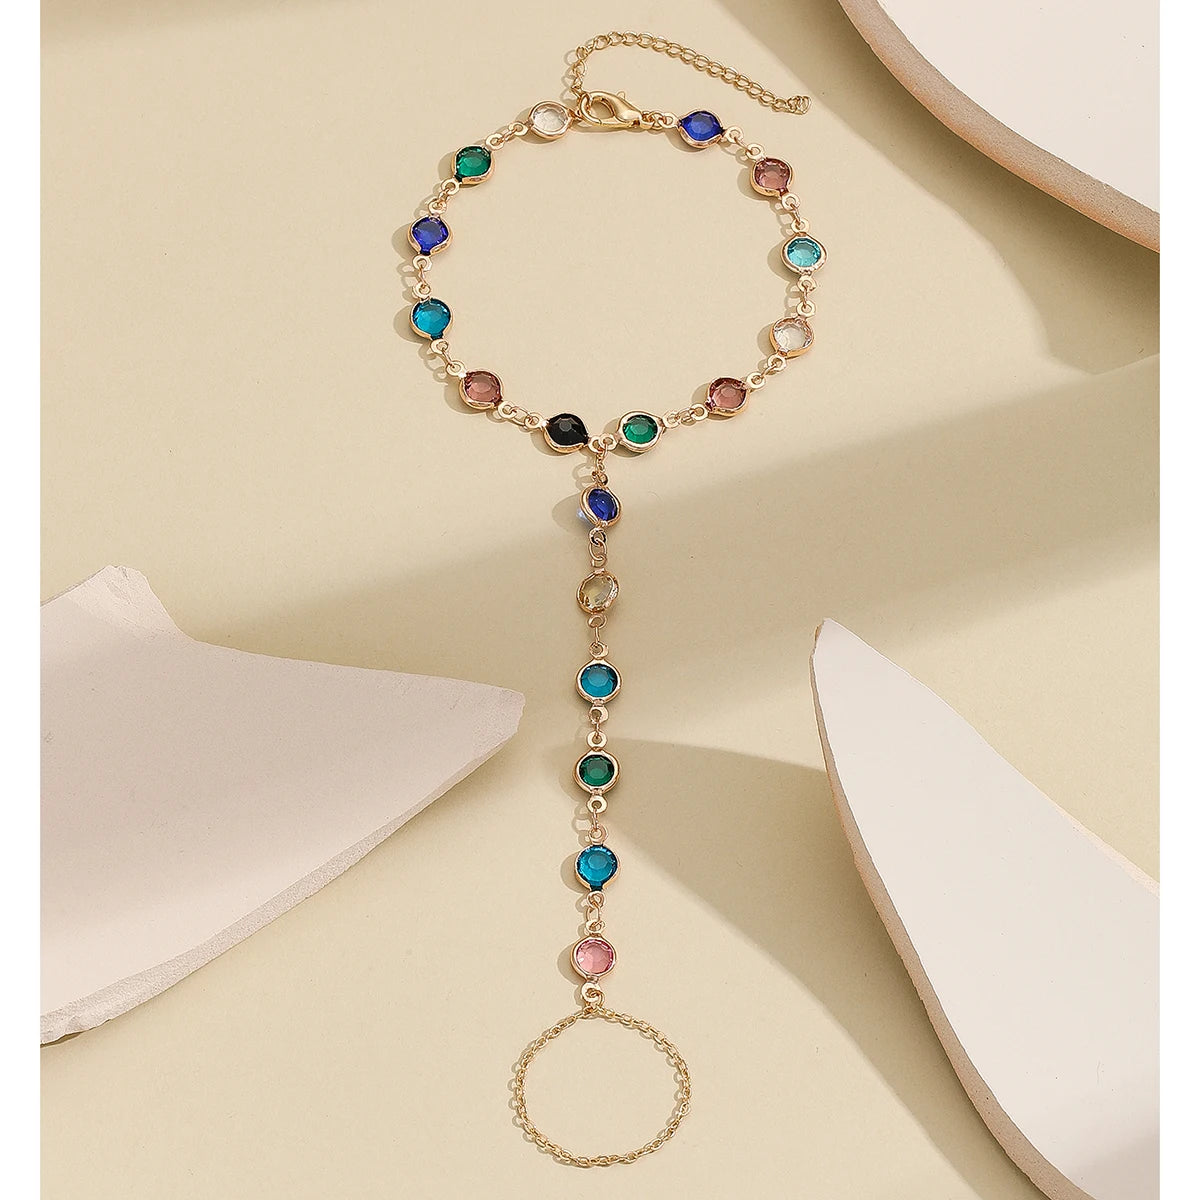 Colorful Zircon Crystal Link Chain Wrist Bracelet For Women Finger Ring Bracelets Trend Statement Jewelry